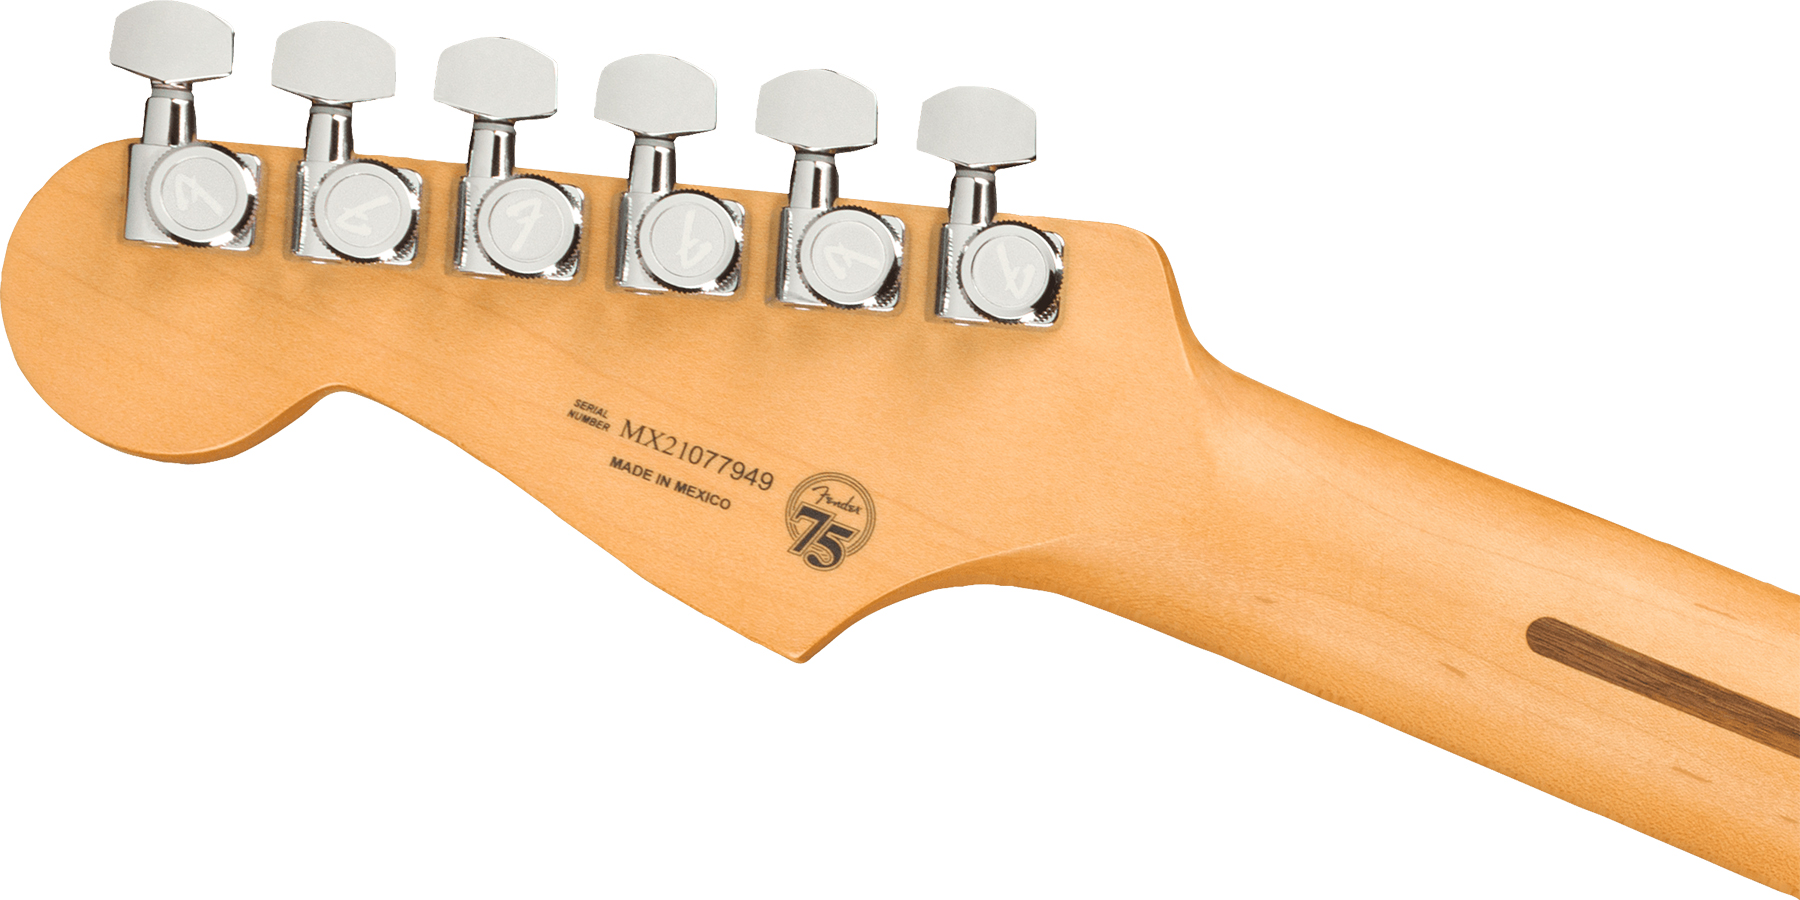 Fender Strat Player Plus Lh Mex Gaucher 3s Trem Mn - 3-color Sunburst - Left-handed electric guitar - Variation 3